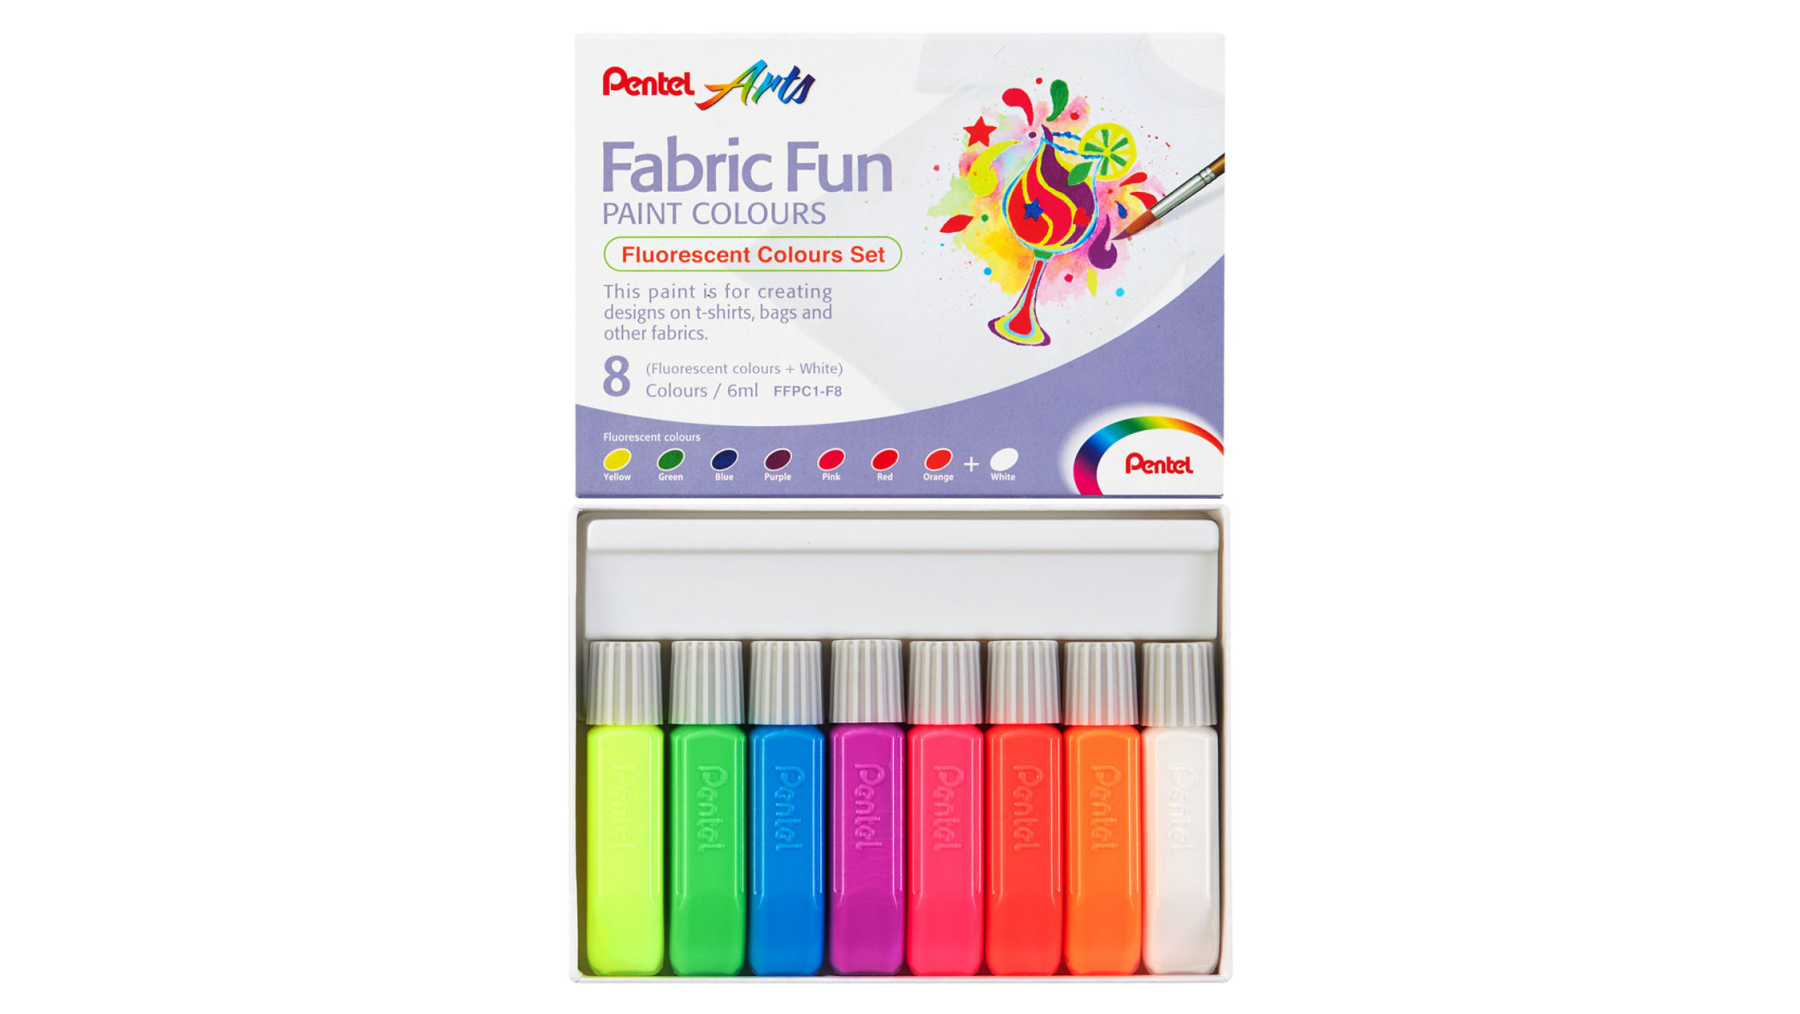 Fabric Fun Paint Colours Fluorescent